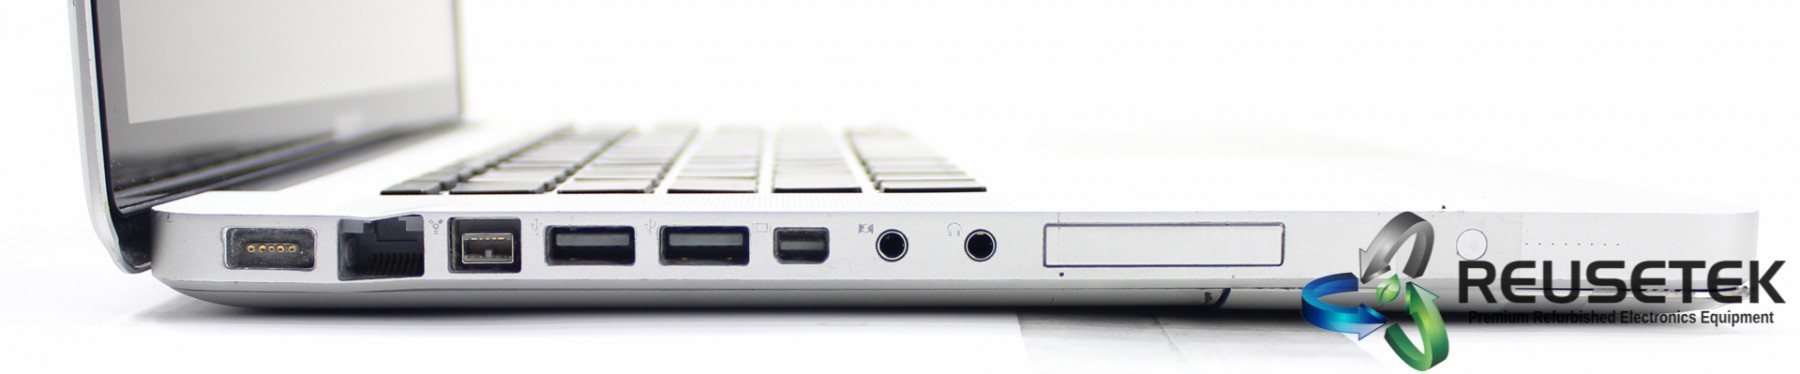 500030995-Apple Macbook Pro A1286 MC118LL/A 15" Laptop-image